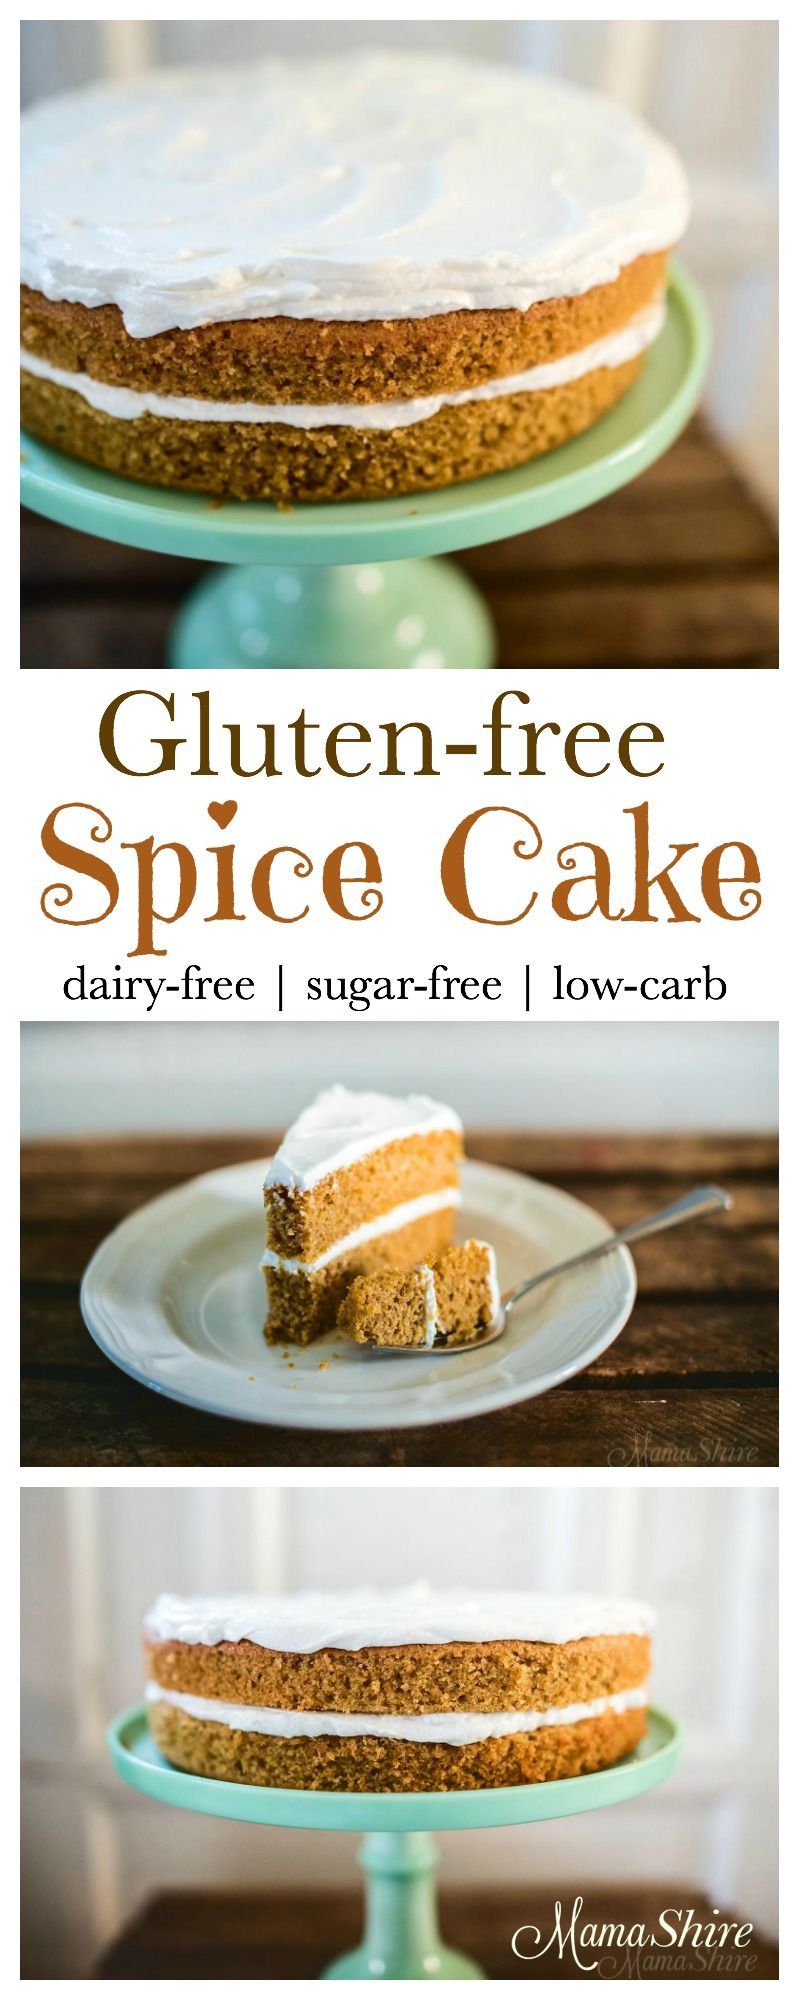 Spice Cake (Gluten-Free, Dairy-Free, Sugar-Free) - MamaShire -   20 cake Pretty gluten free ideas